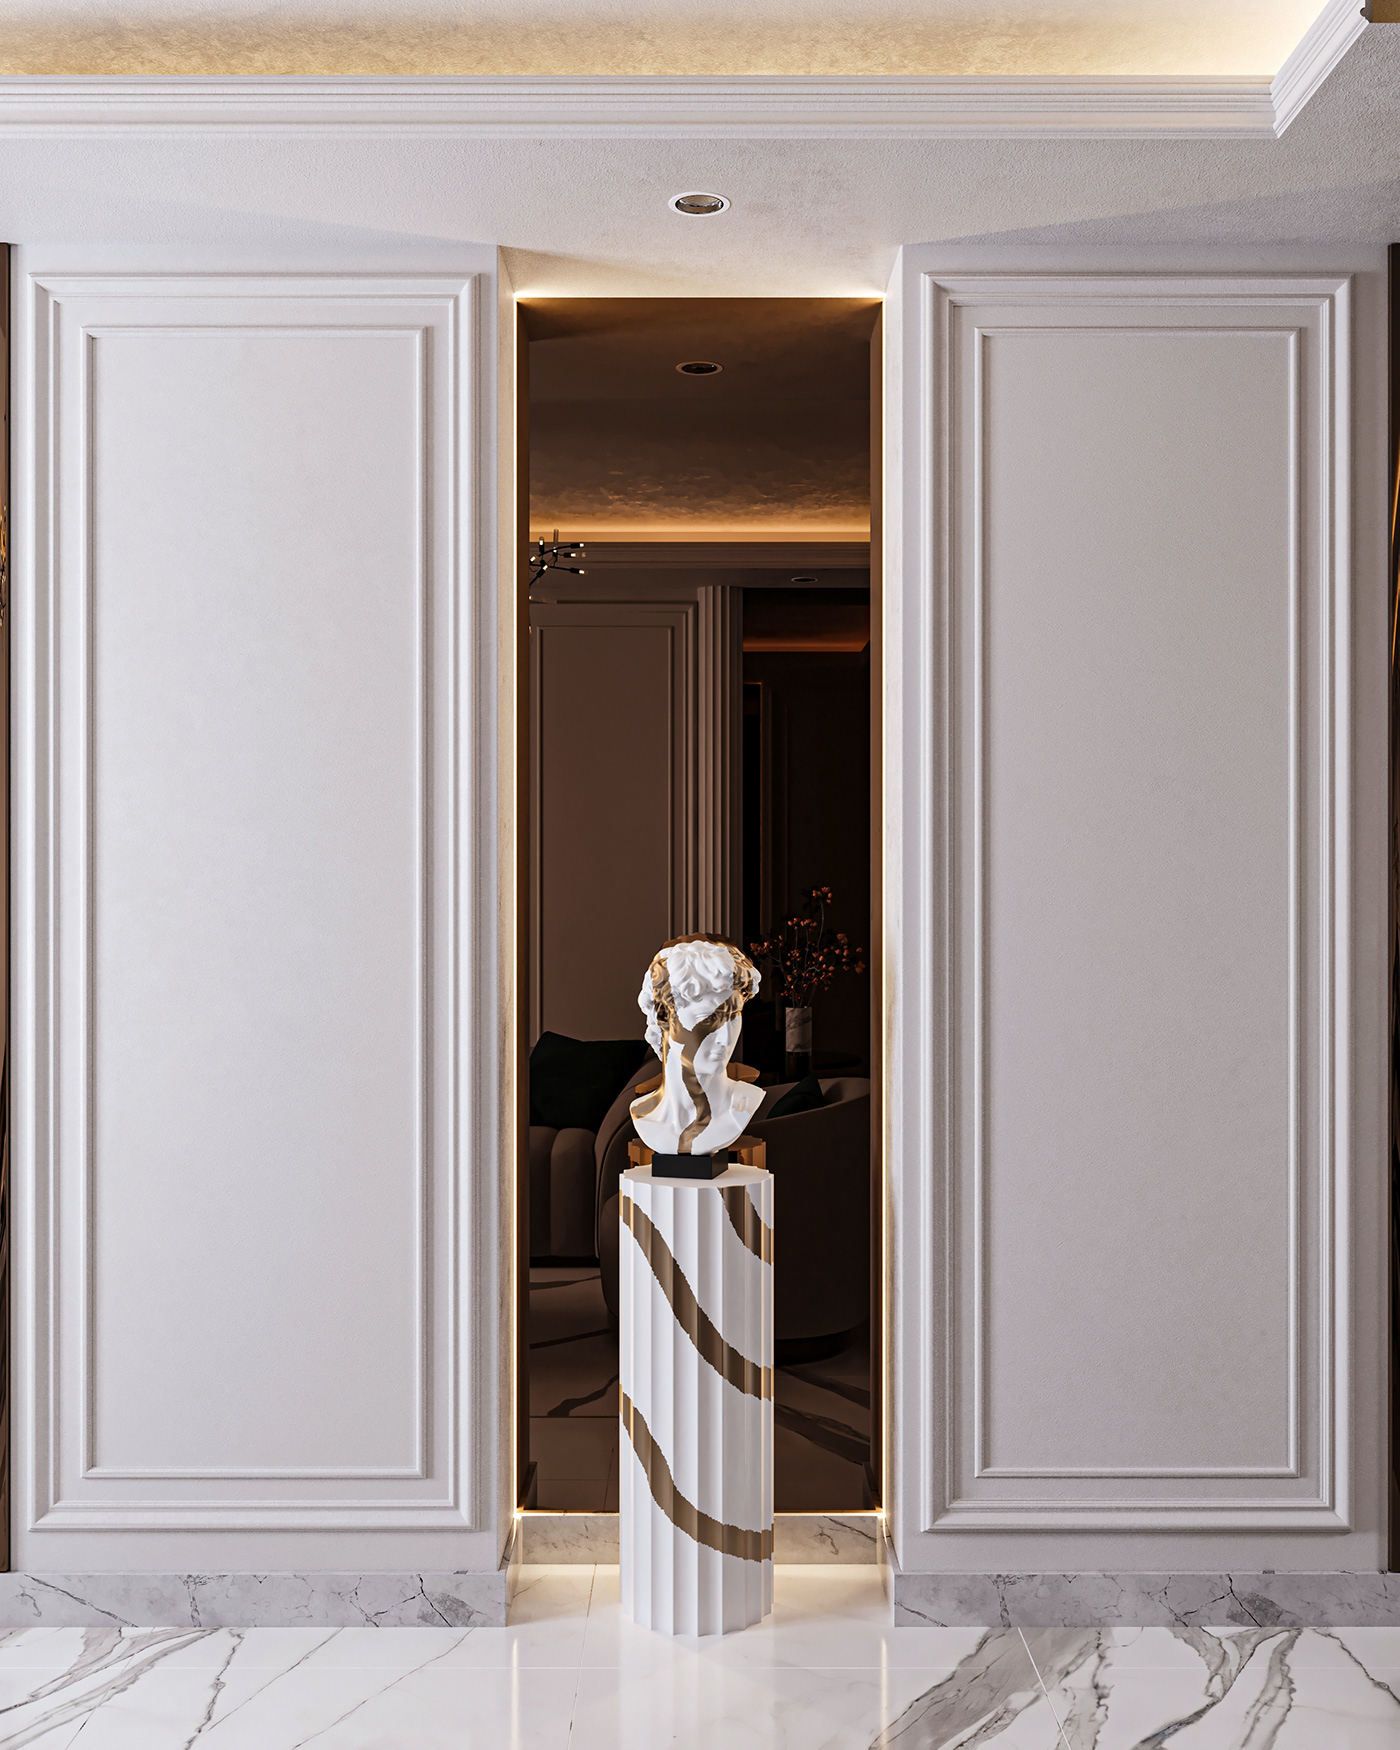 neoclassic reception design reception luxury